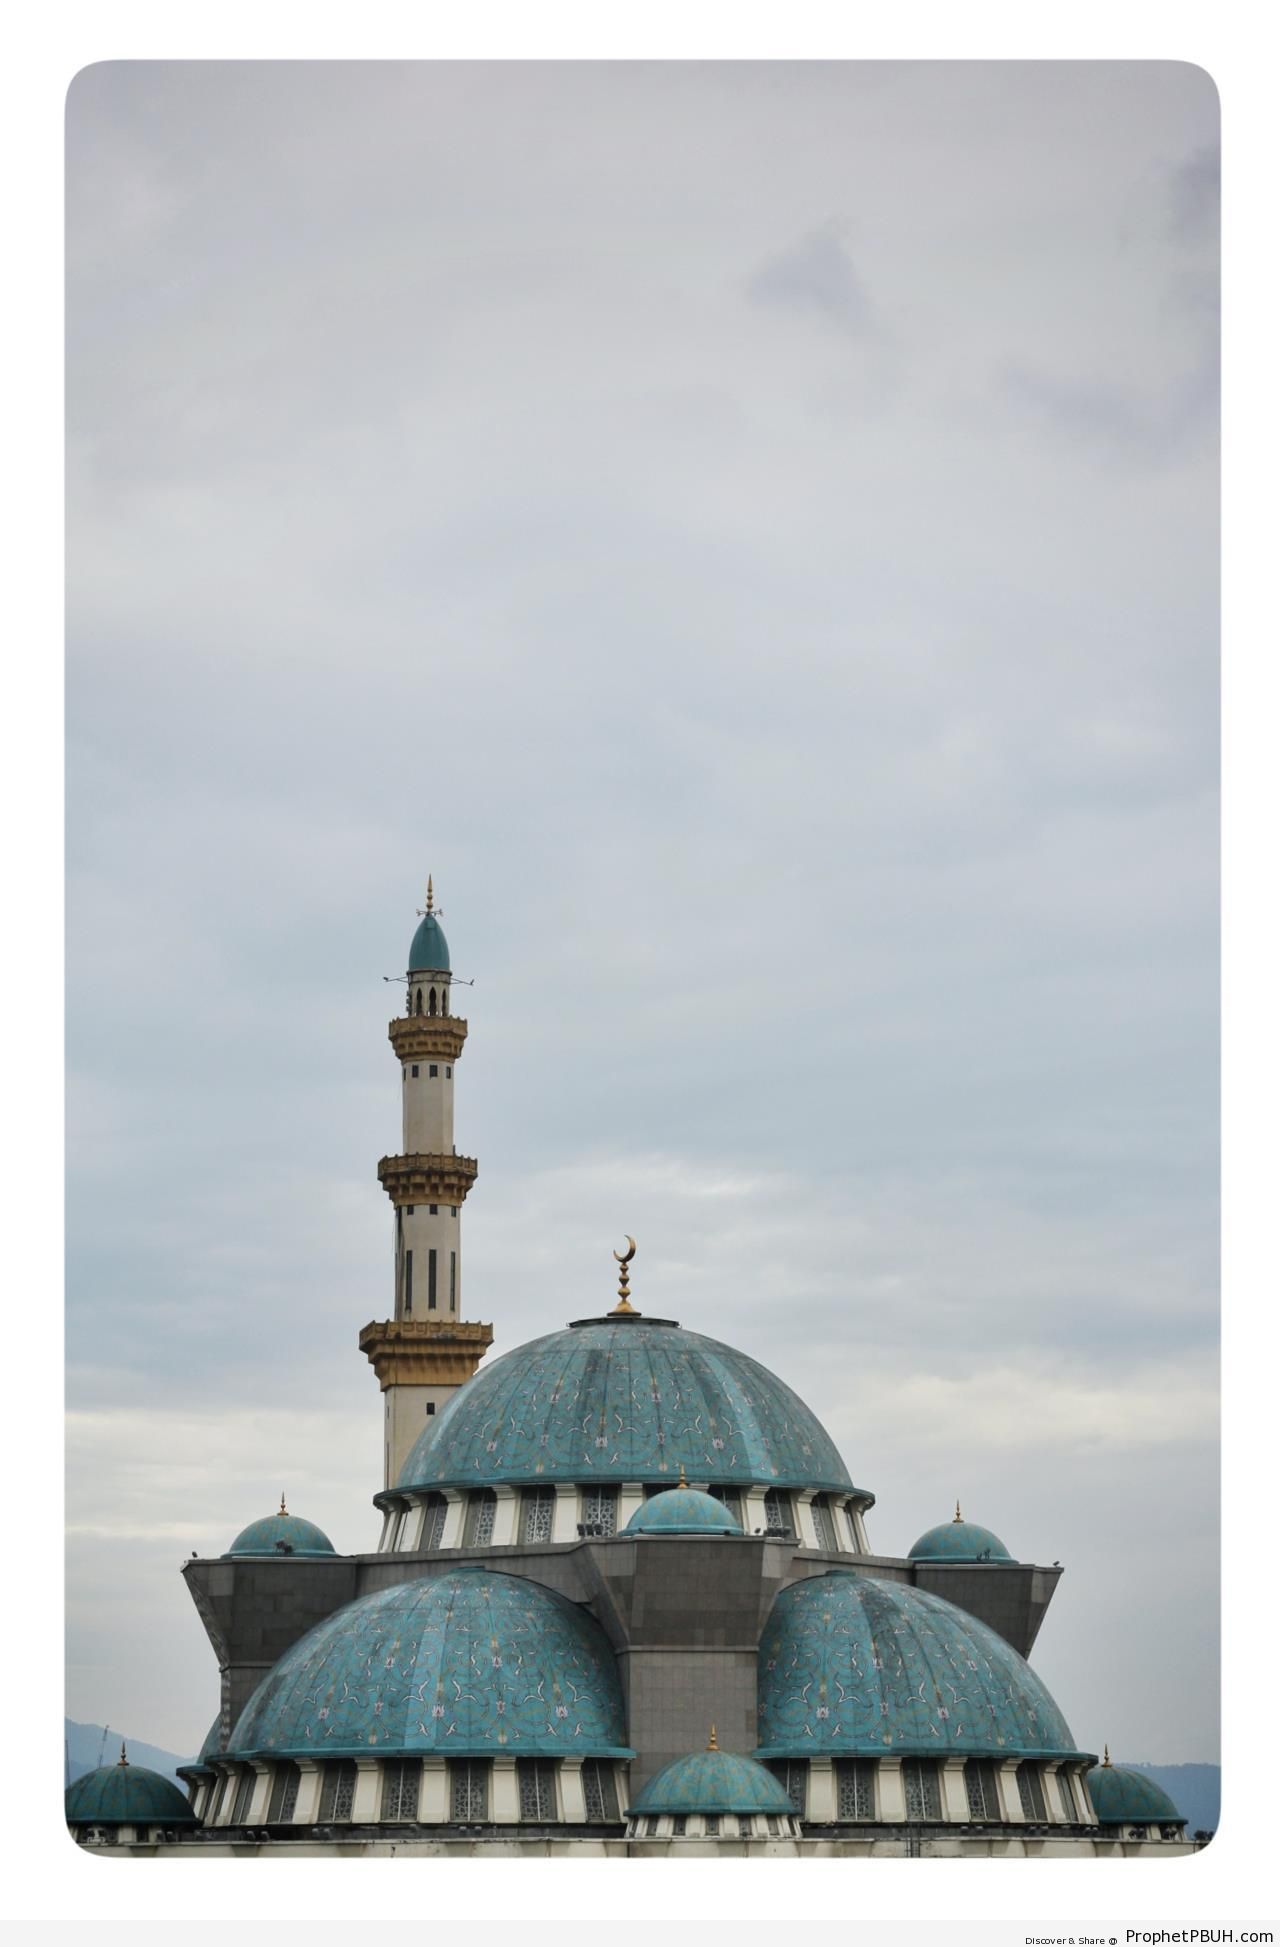 Federal Territory Mosque in Kuala Lumpur, Malaysia - Islamic Architecture -Picture